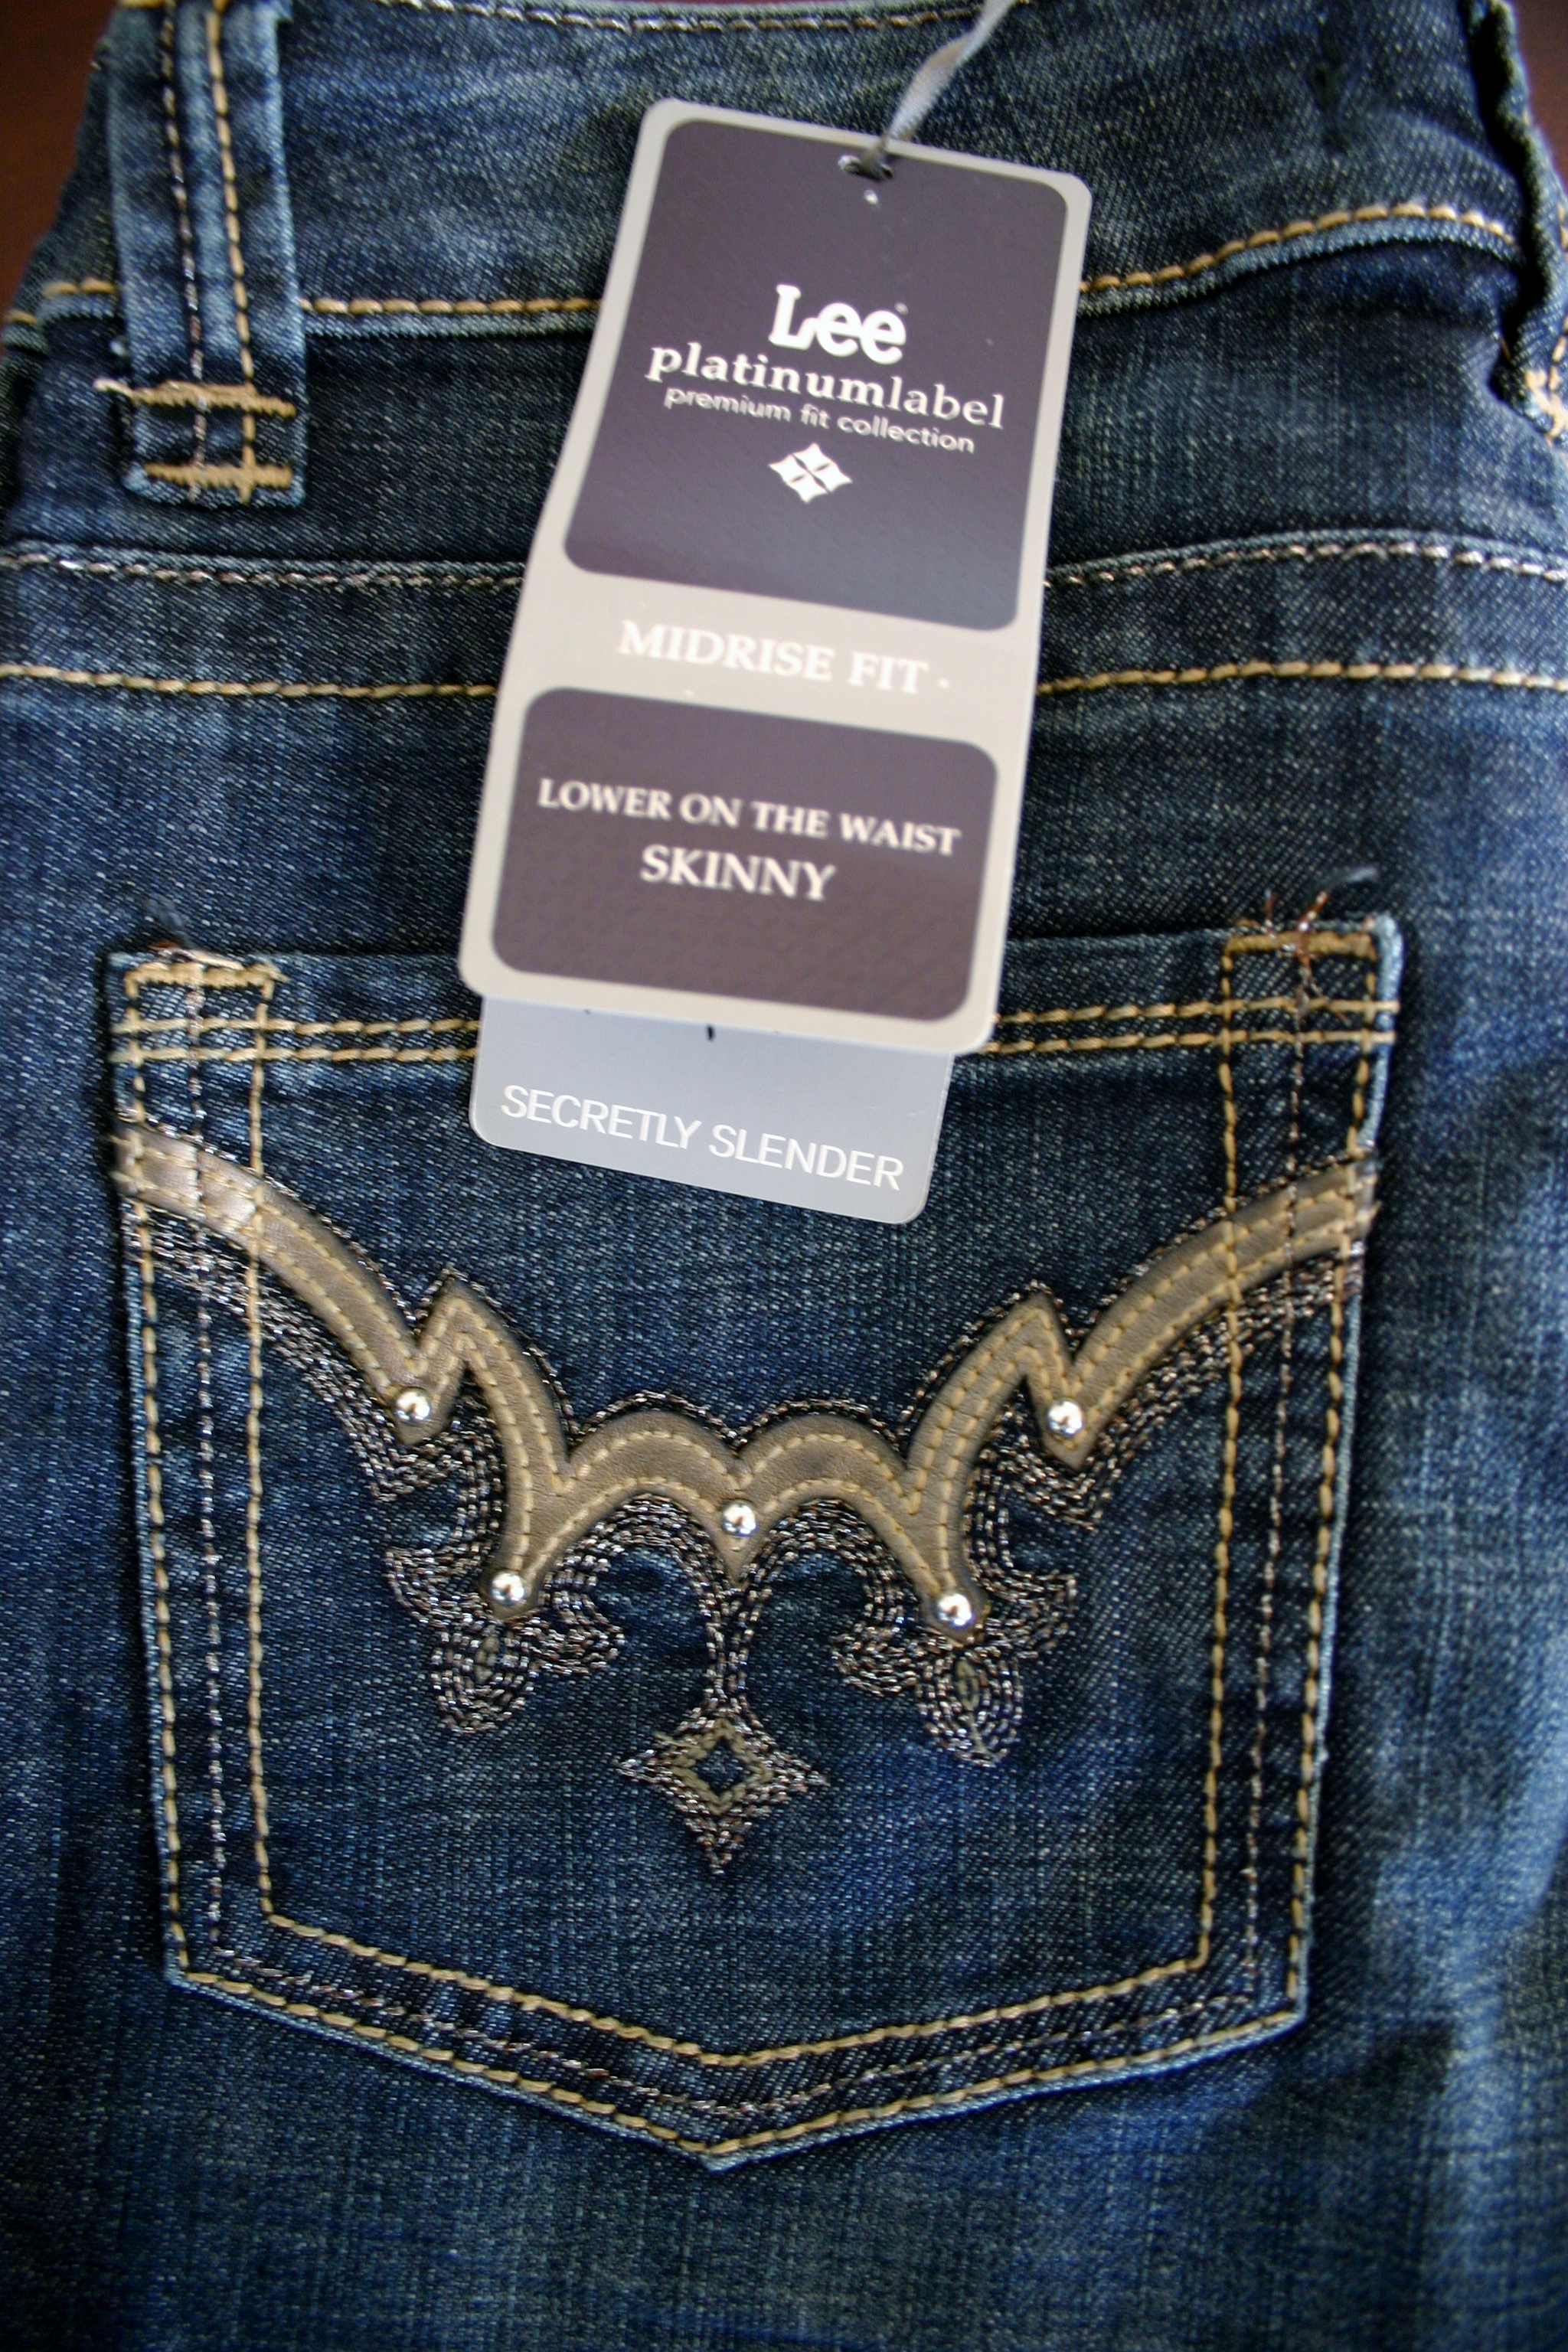 lee platinum label jeans bootcut